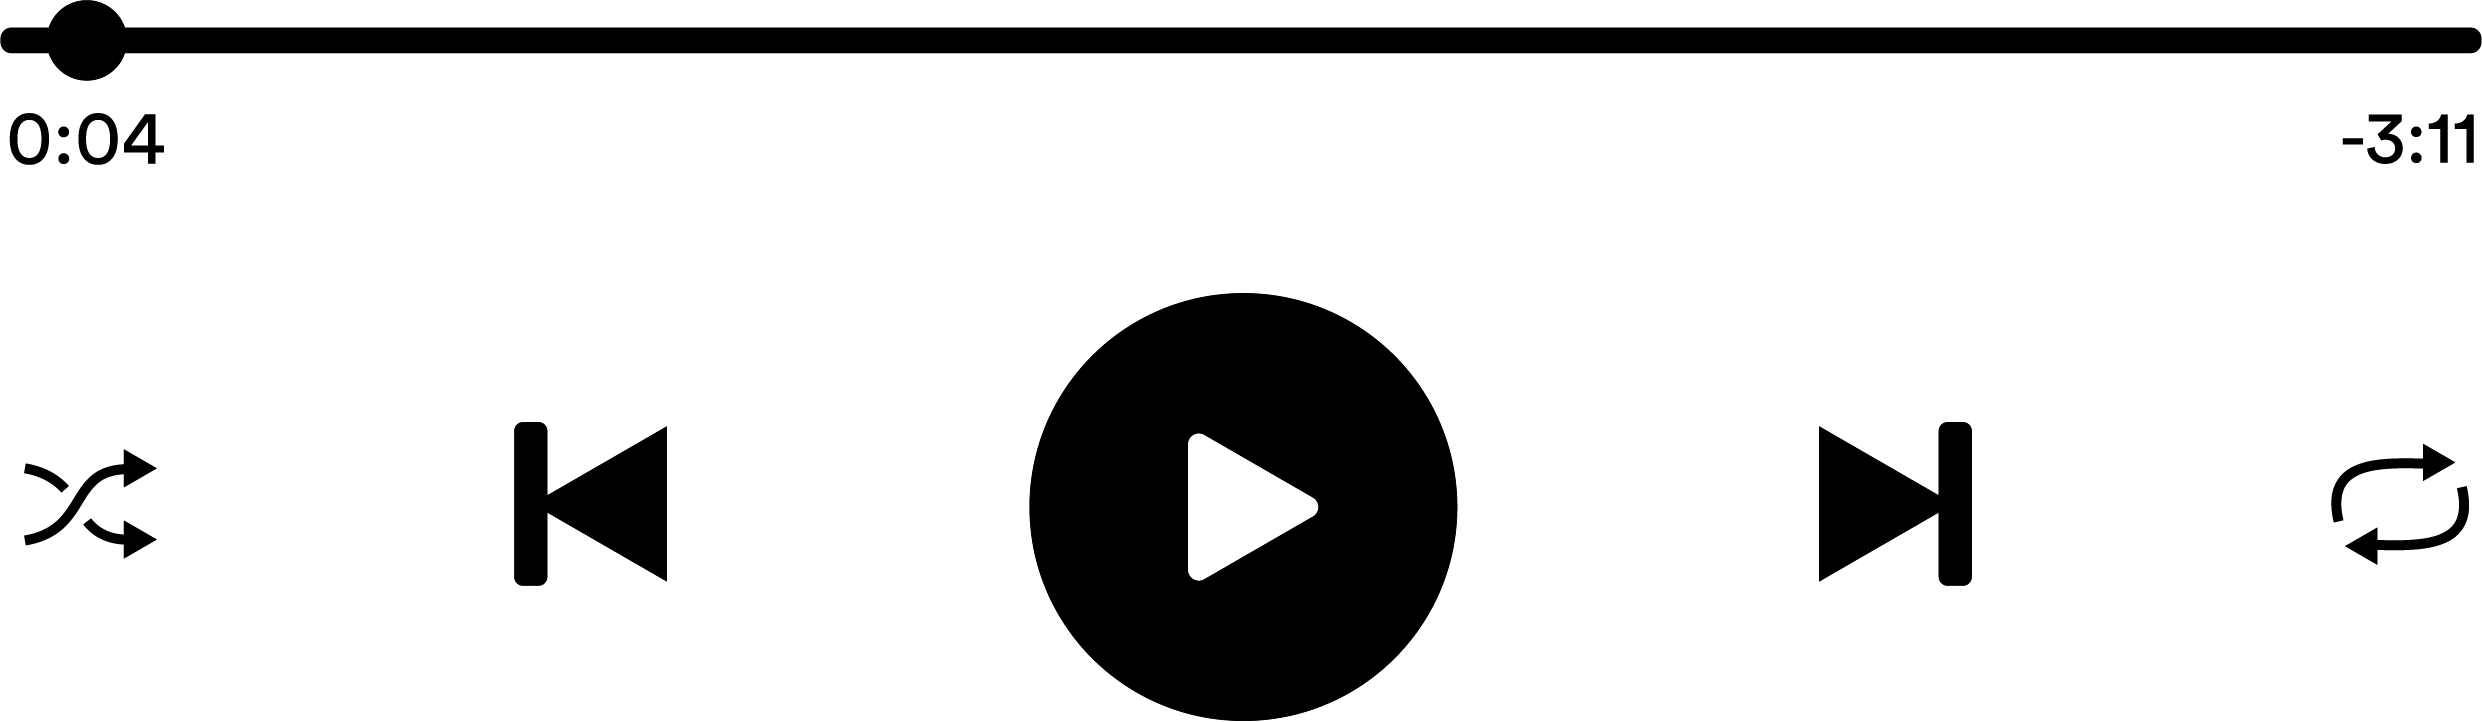 Panorama Placa Spotify Personalizada Negra 10x15 cm - Fabricada en